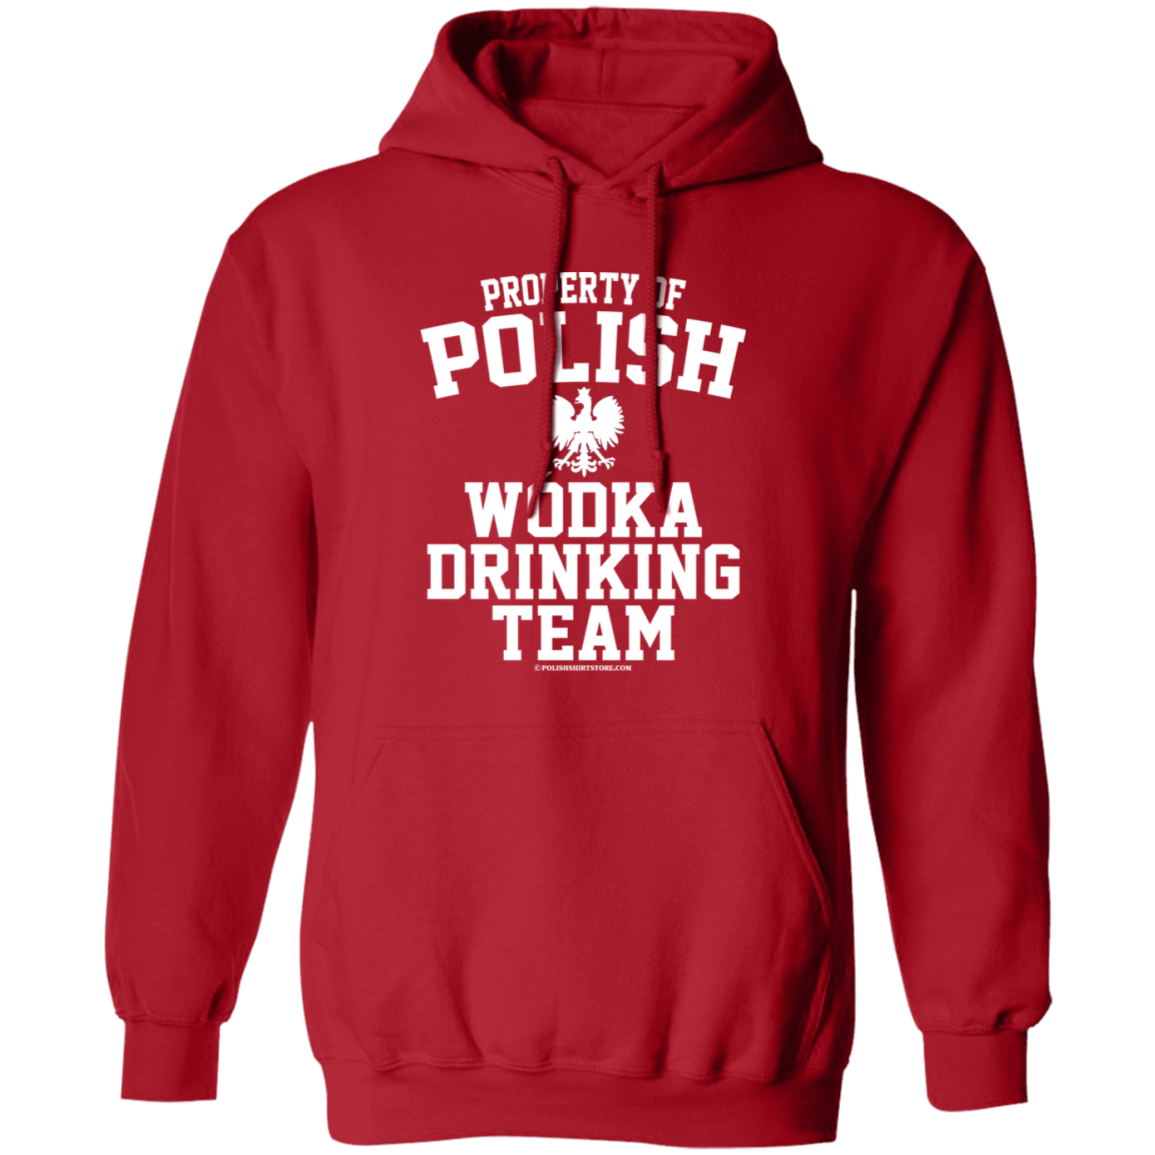 Property of Polish Wodka Drinking Team Apparel CustomCat G185 Pullover Hoodie Red S